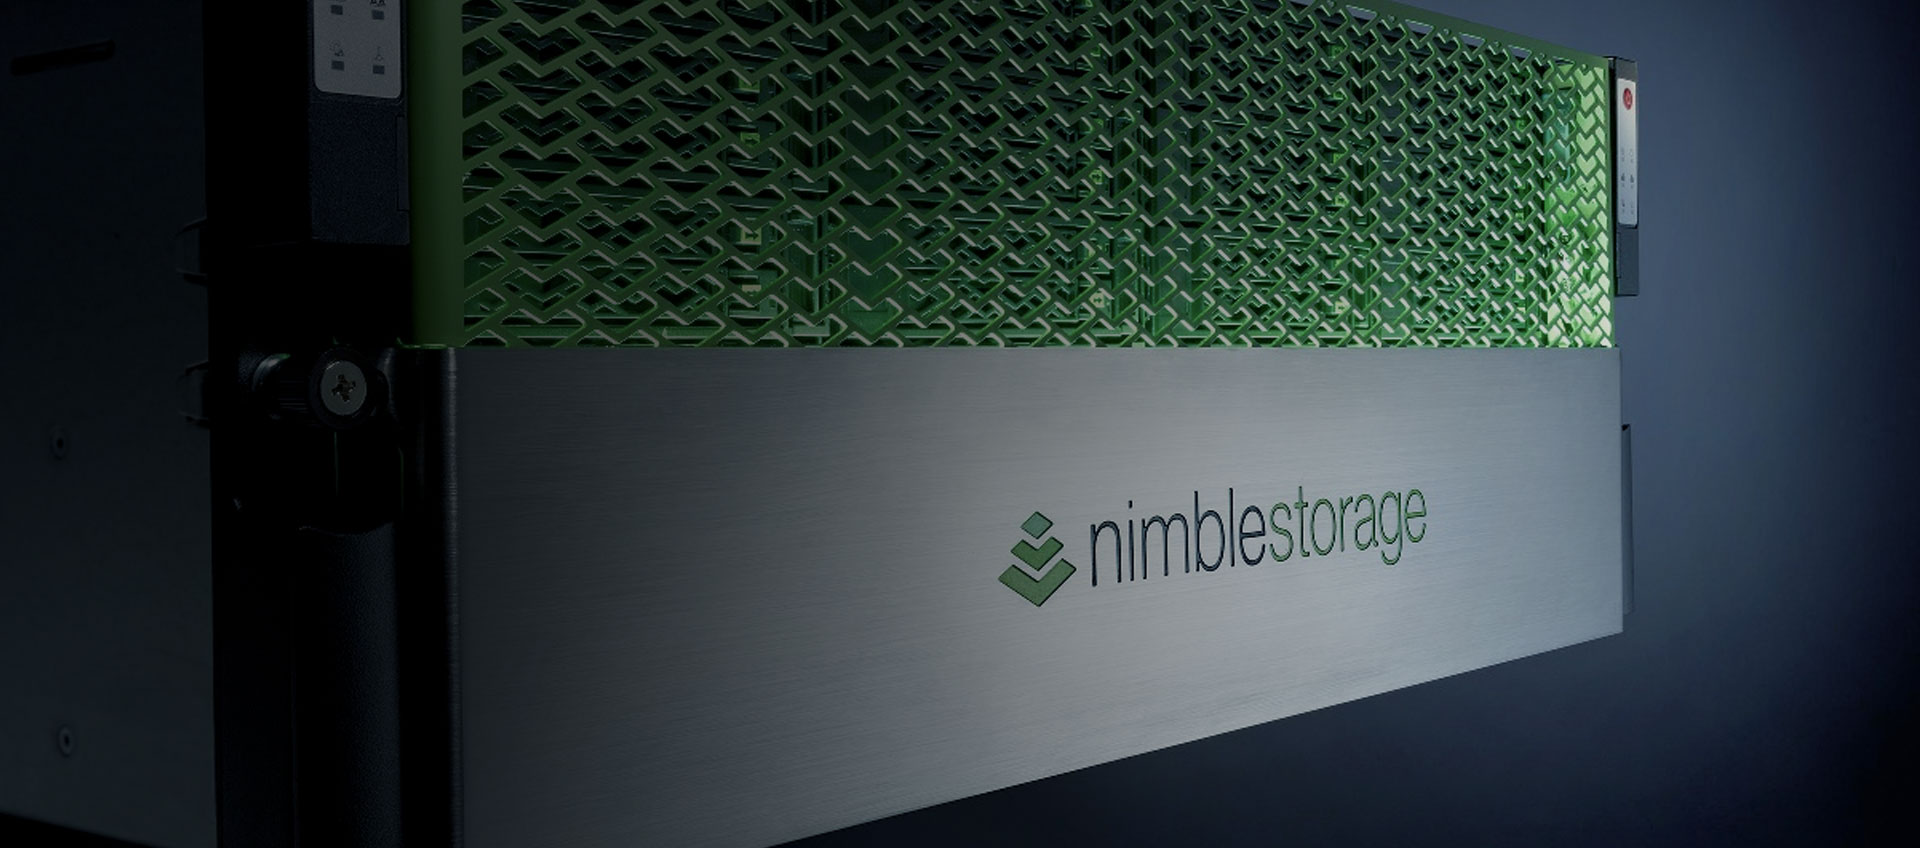 A Nimble storage solution